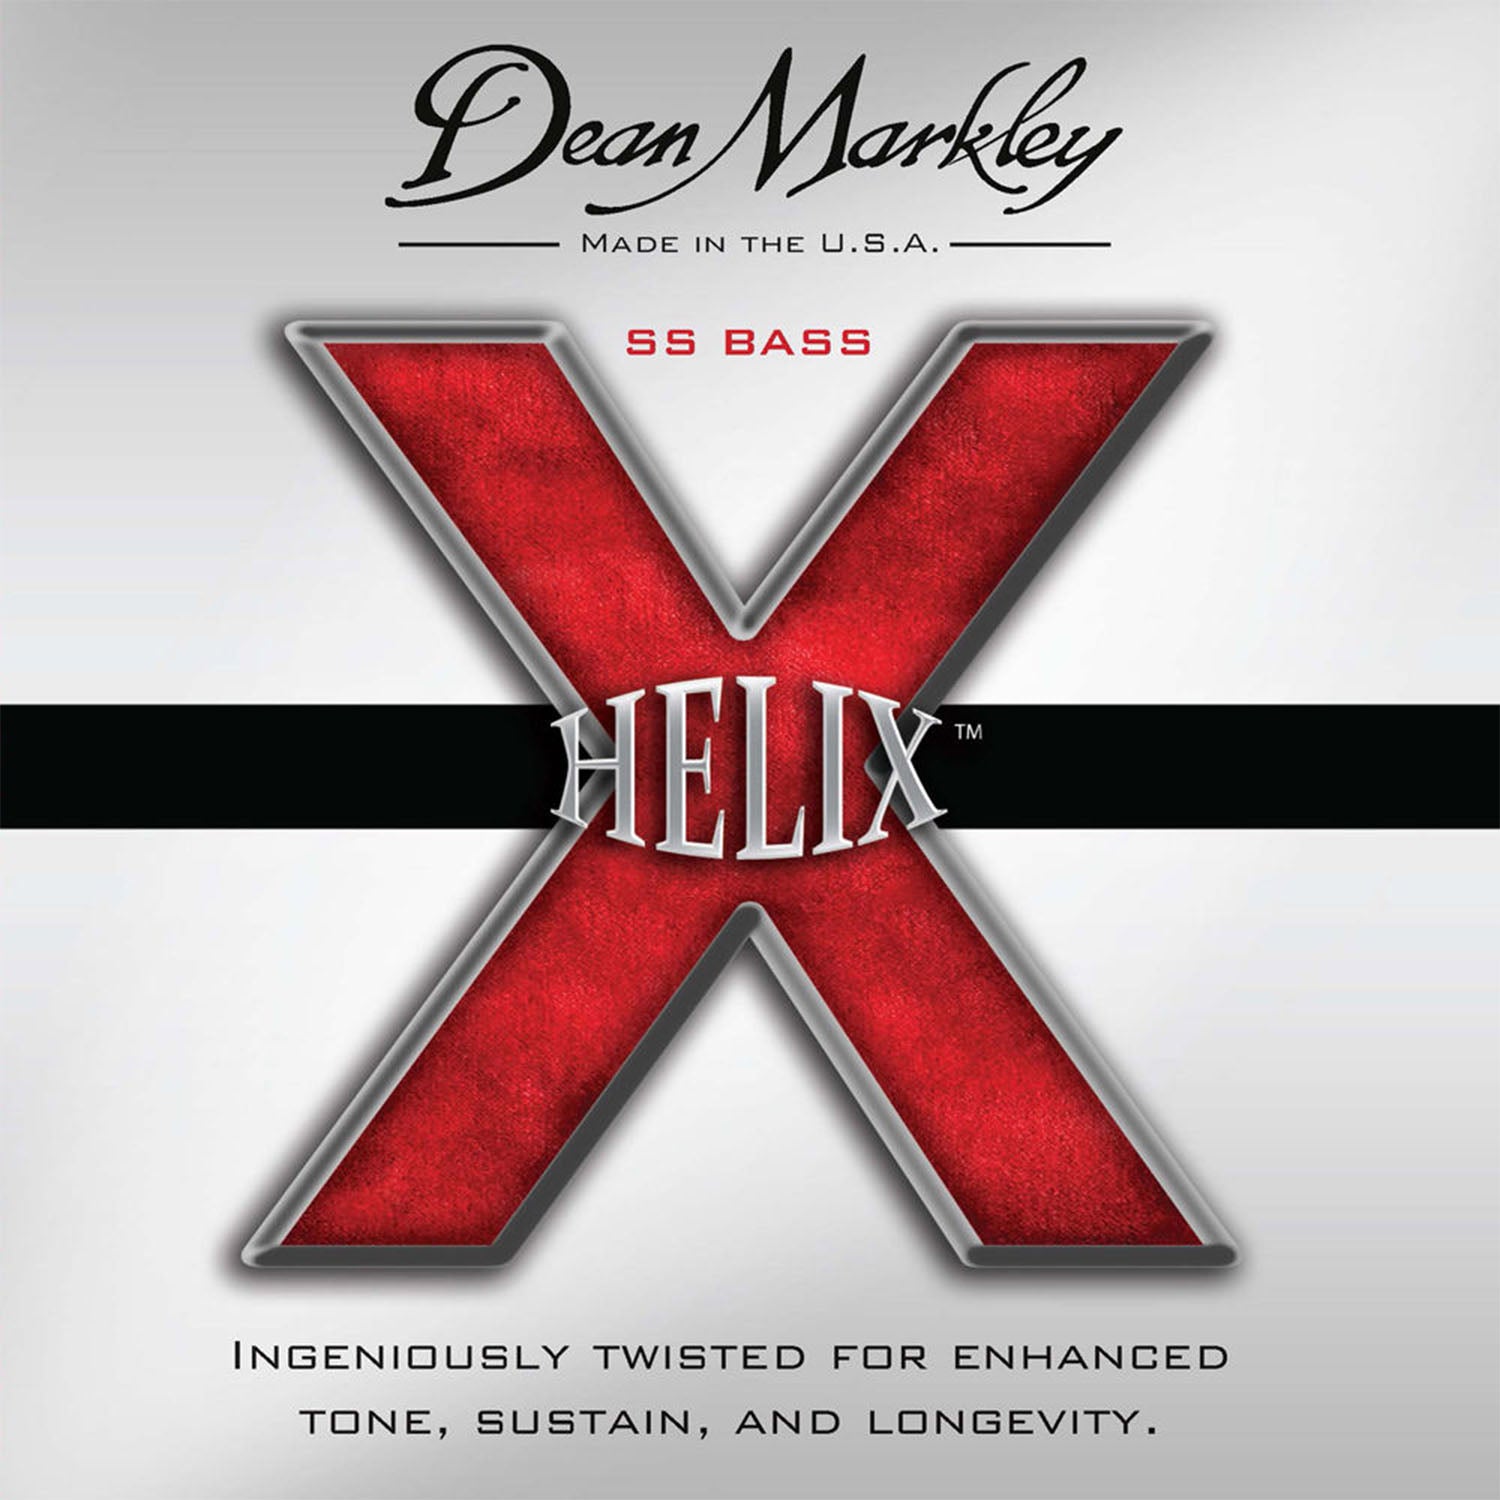 Dean Markley 2613 Helix SS Bass Guitar Strings - 40-100 Gauge, 4-String Set - Hollywood DJ